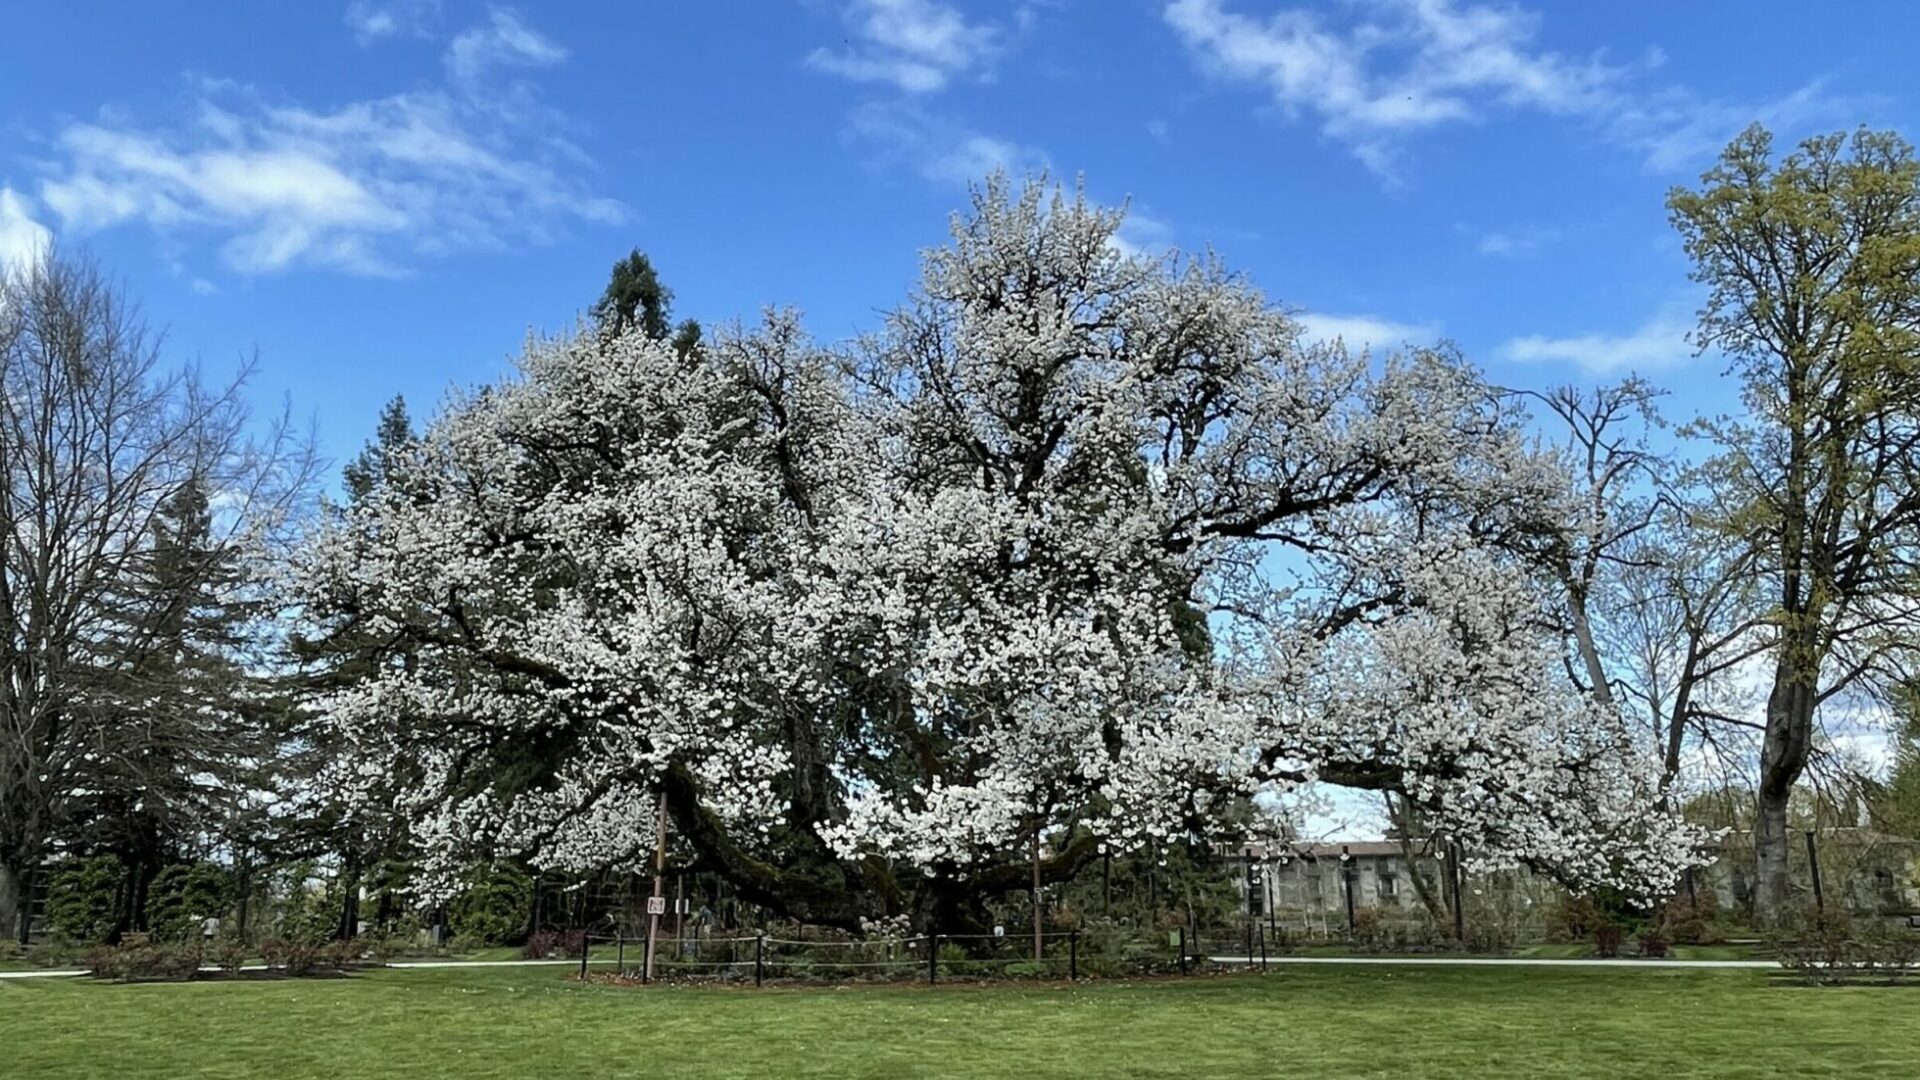 The Owen Cherry an Oregon Heritage Tree in full bloom